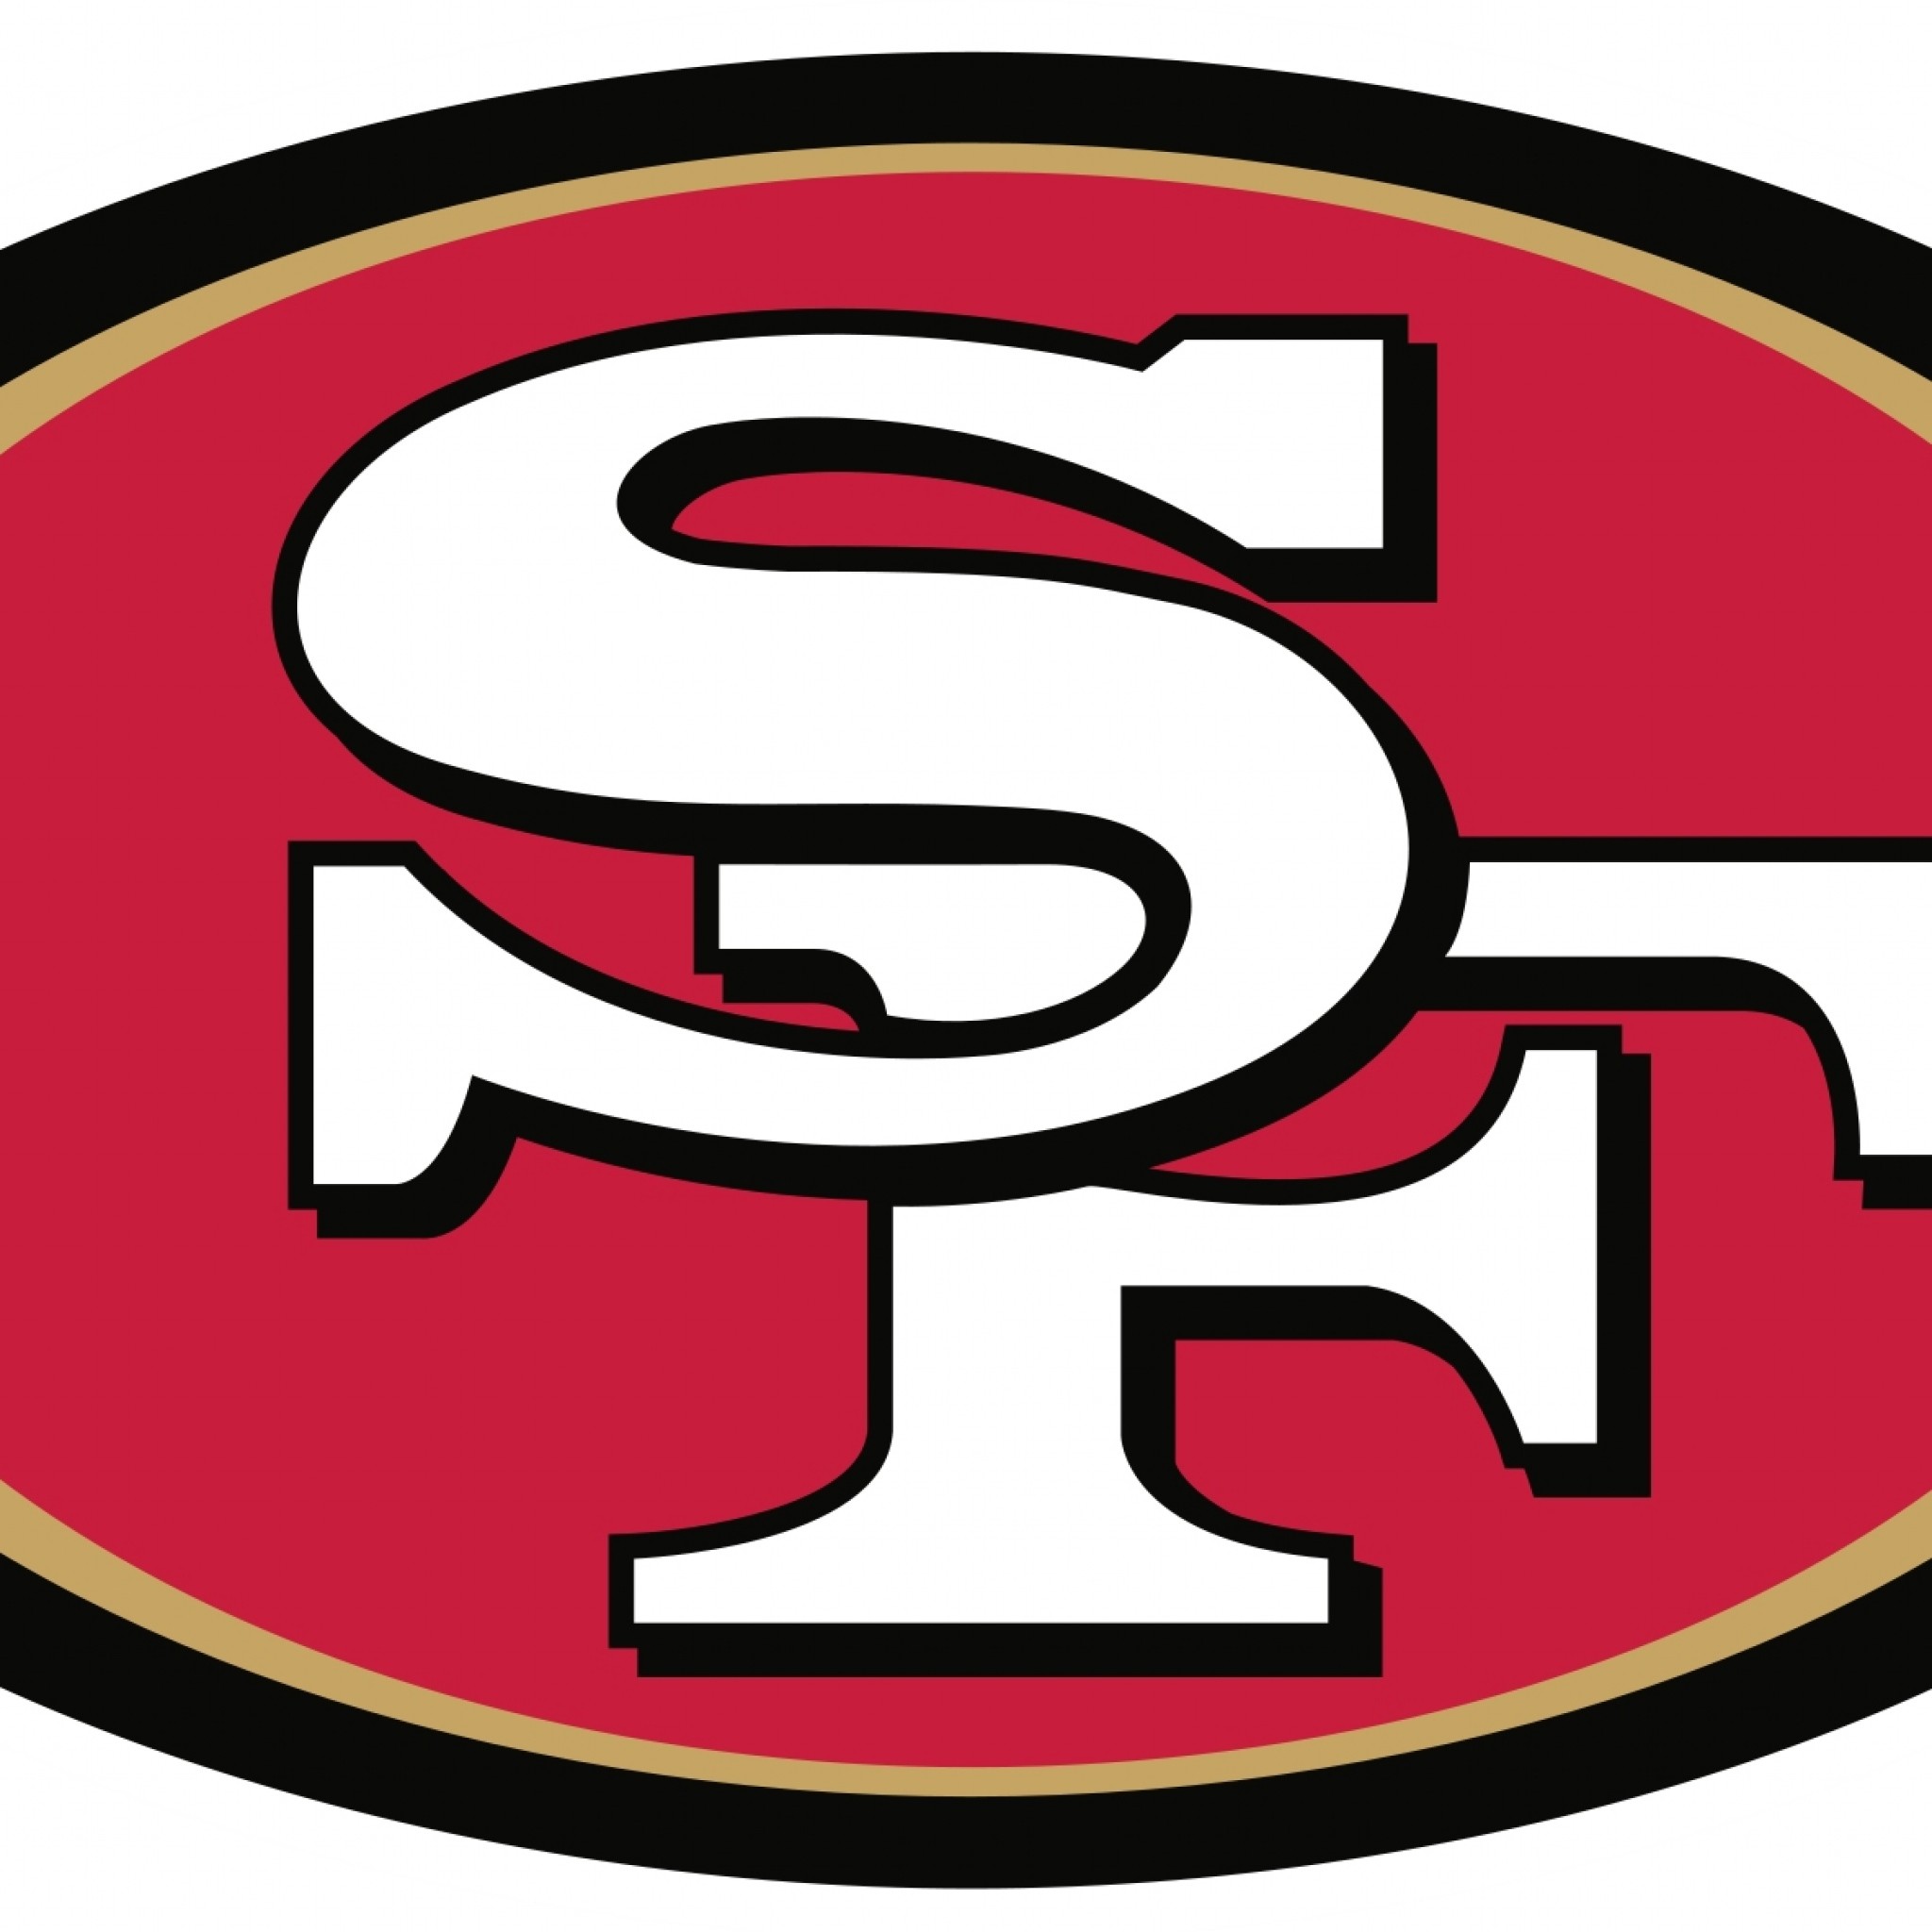 Download Red Logo Of San Francisco 49ers Wallpaper